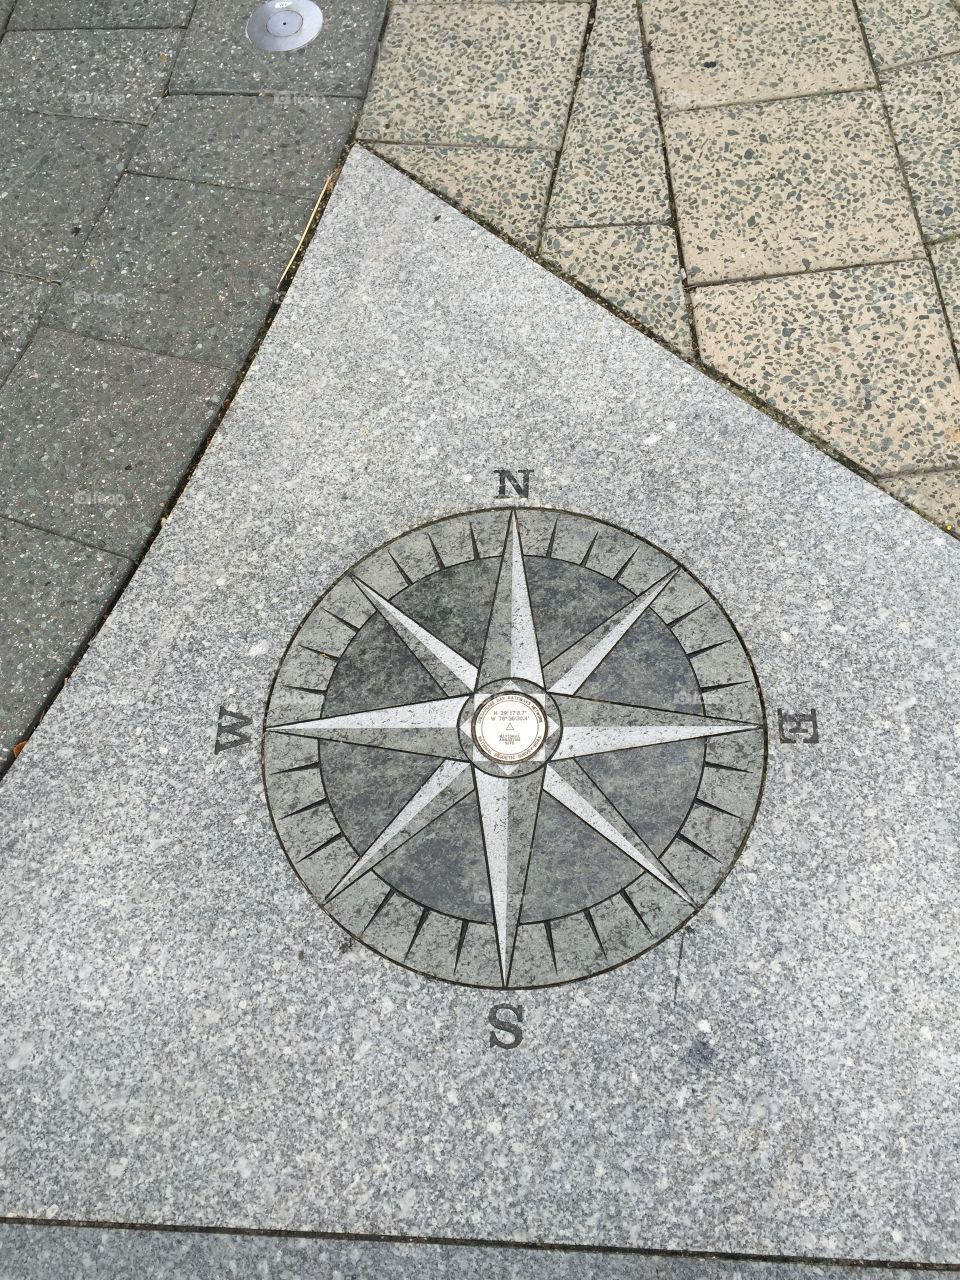 Sidewalk compass 